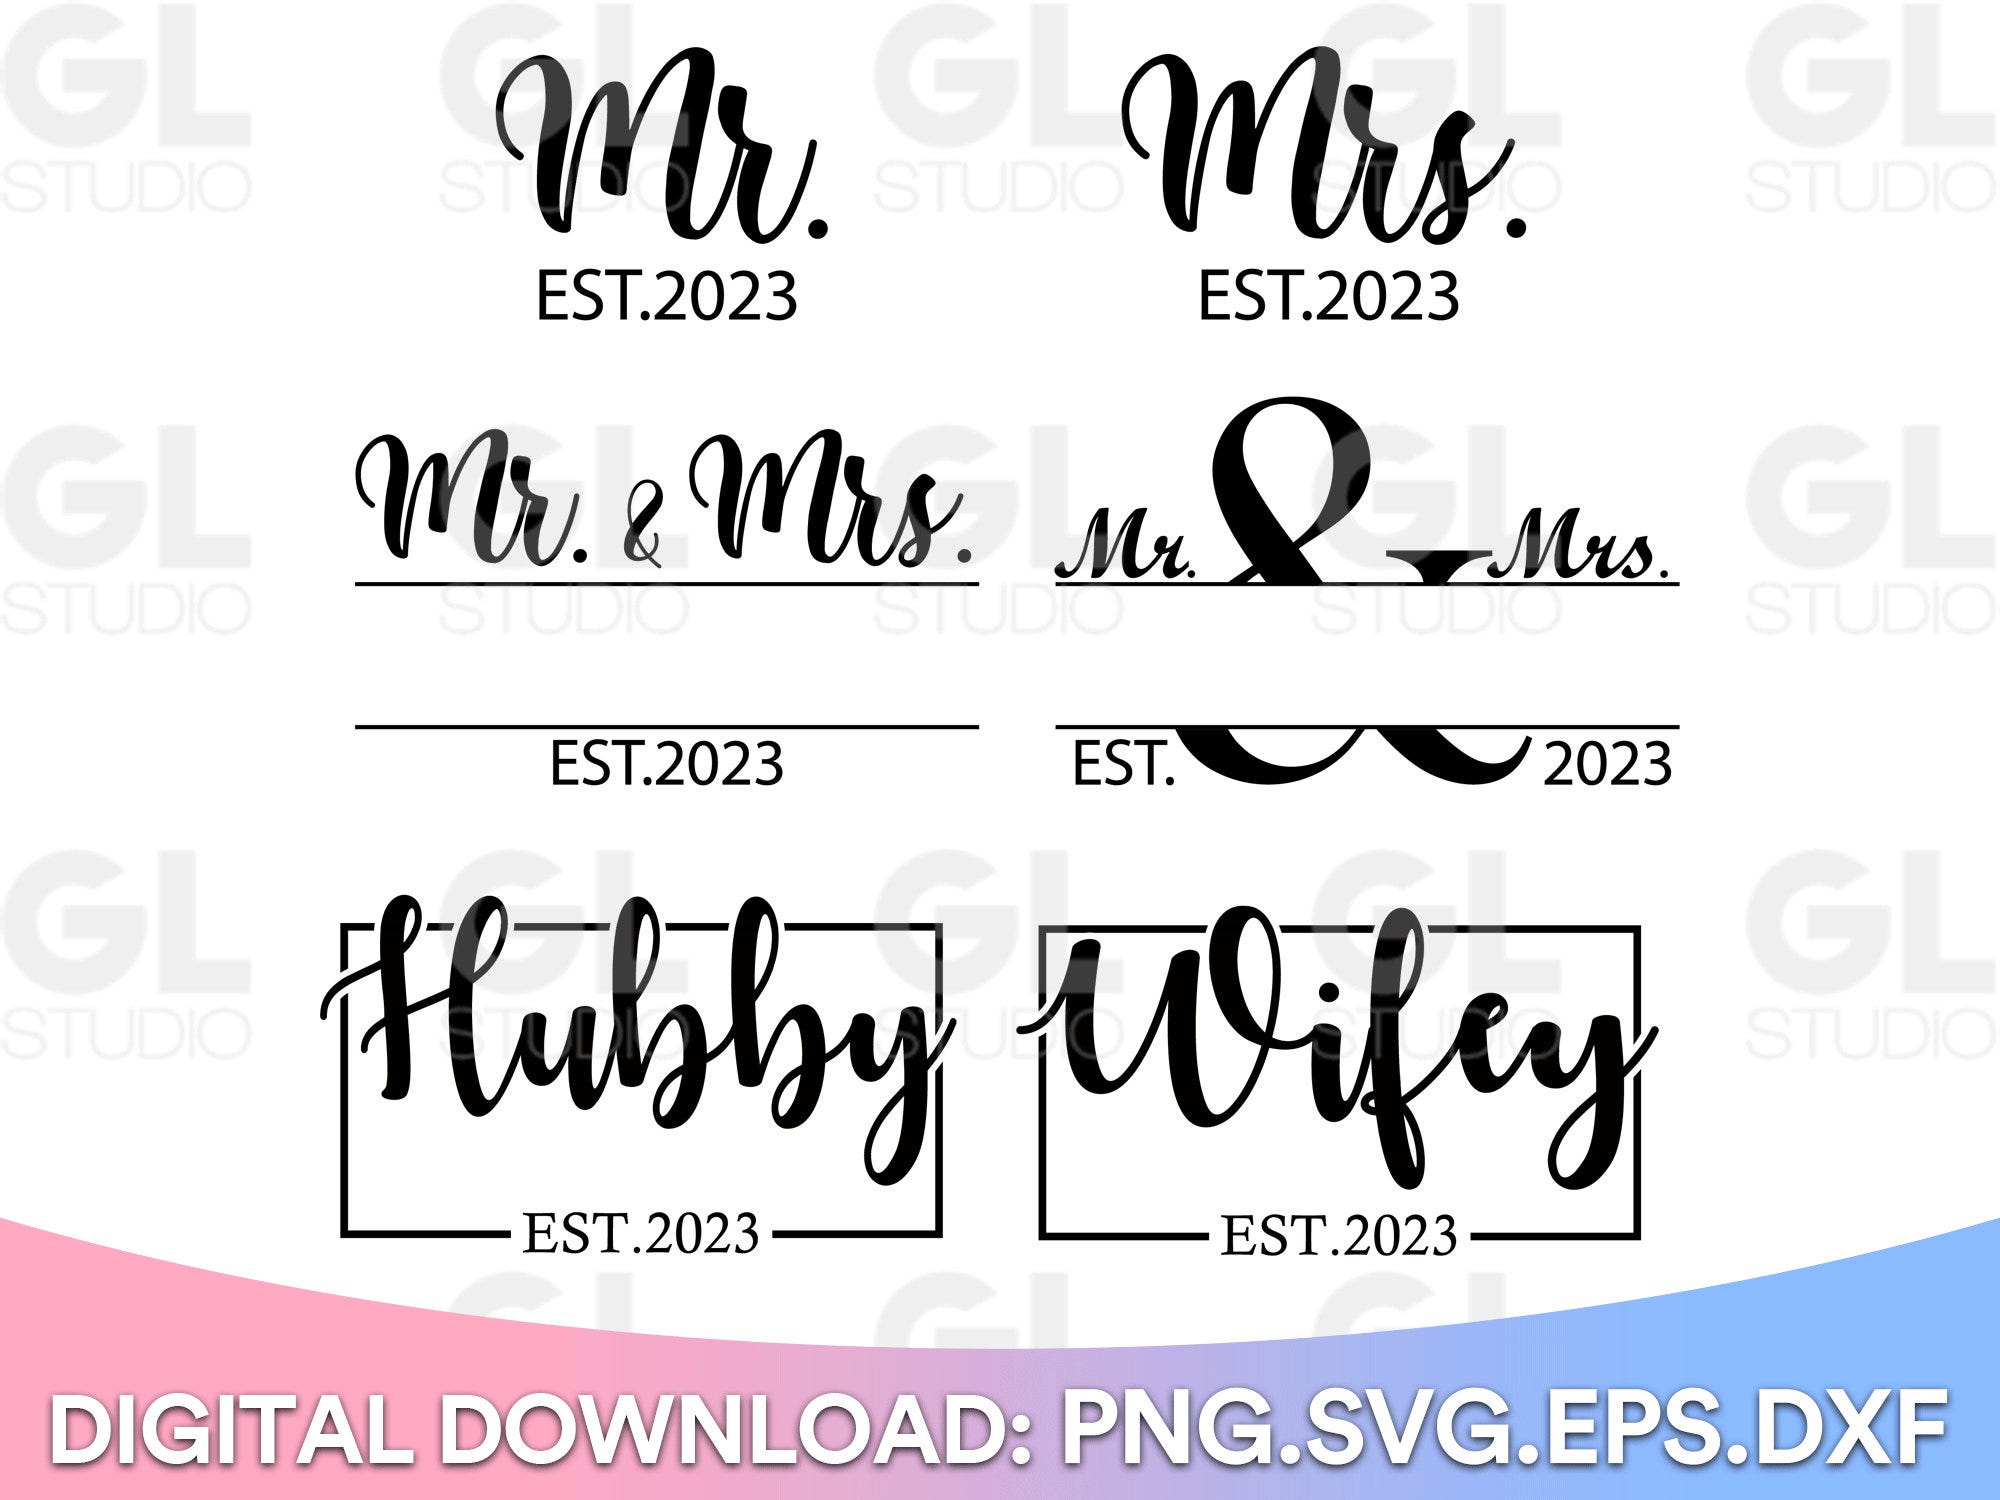 Mr and Mrs 2023 svg, Mr and Mrs split monogram svg, Hubby and Wifey est 2023 svg, marriage svg, wedding 2023 svg, wedding hand lettered, png